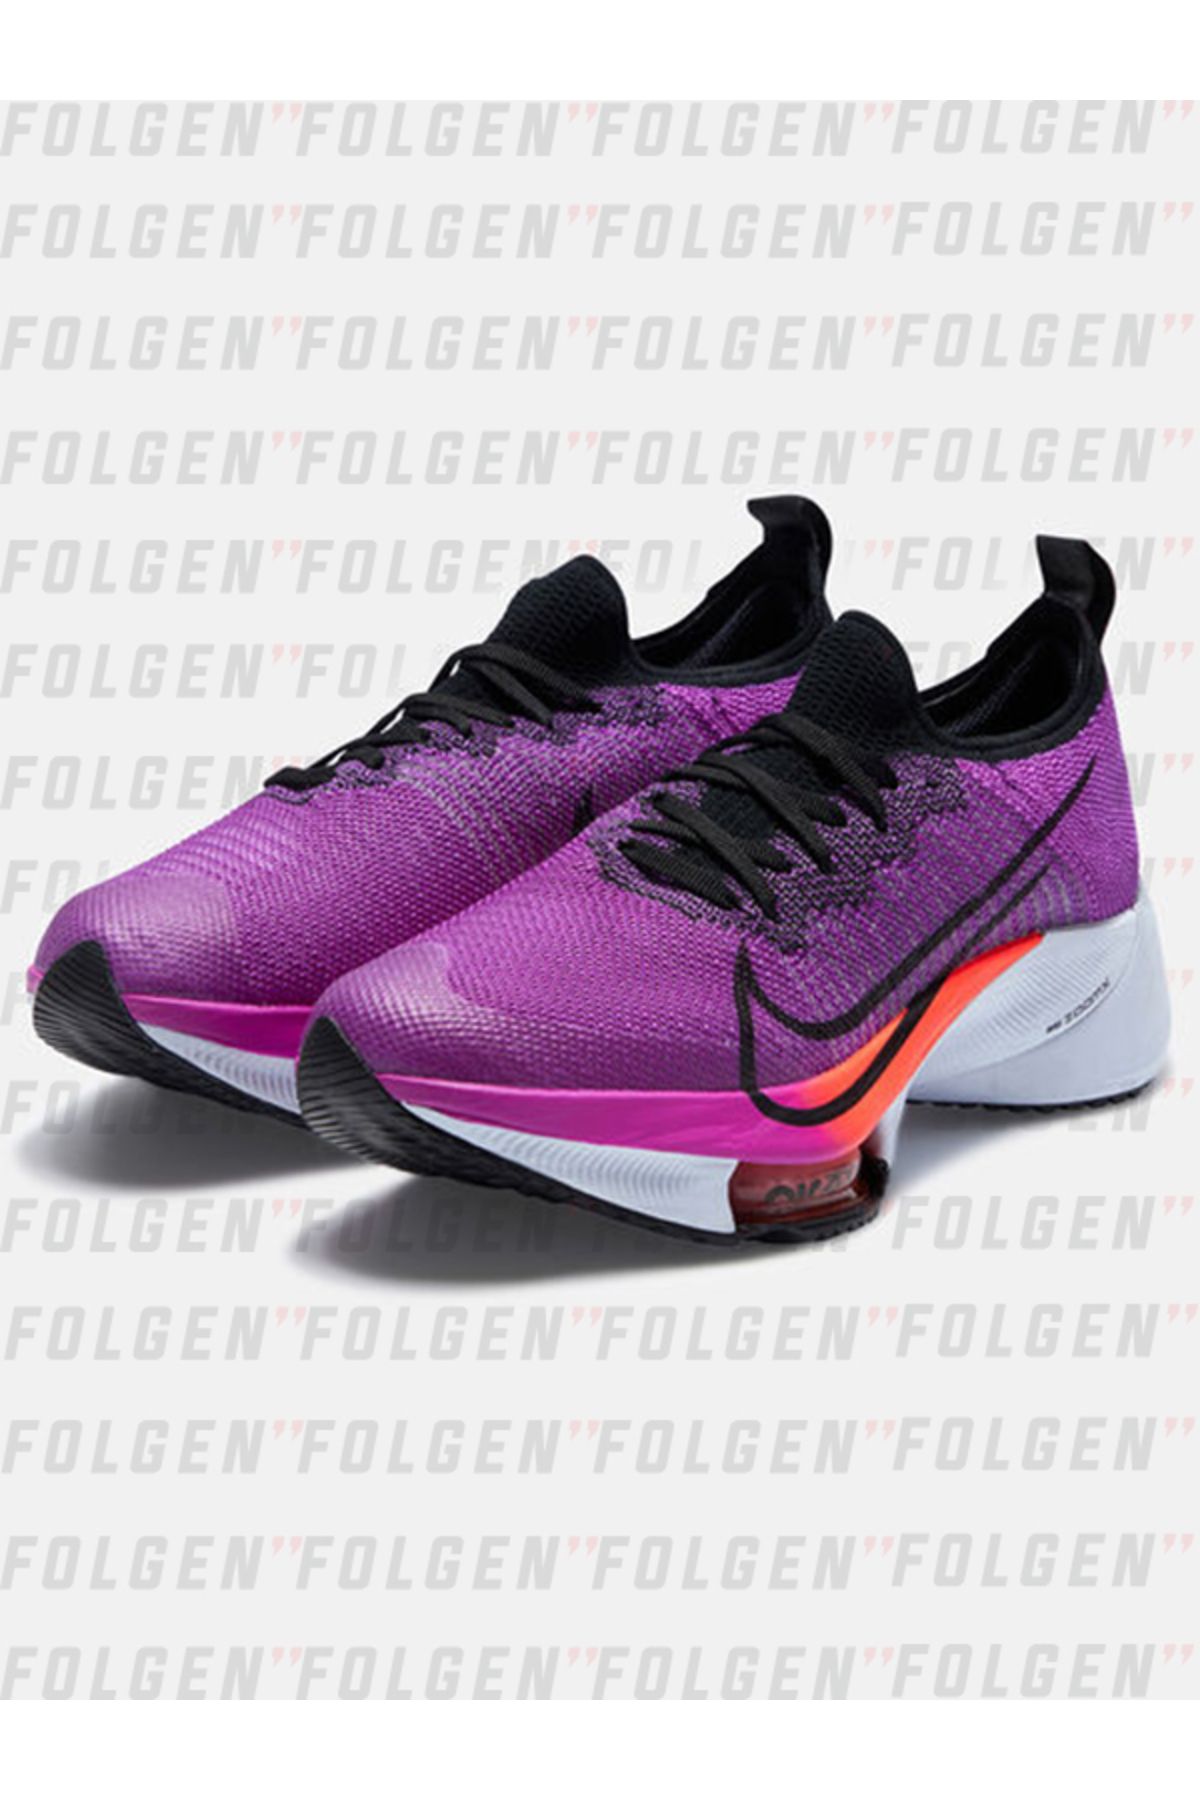 Nike Air Zoom Tempo Next Flyknit Running Shoes Kadın Koşu Ayakkabısı Mor